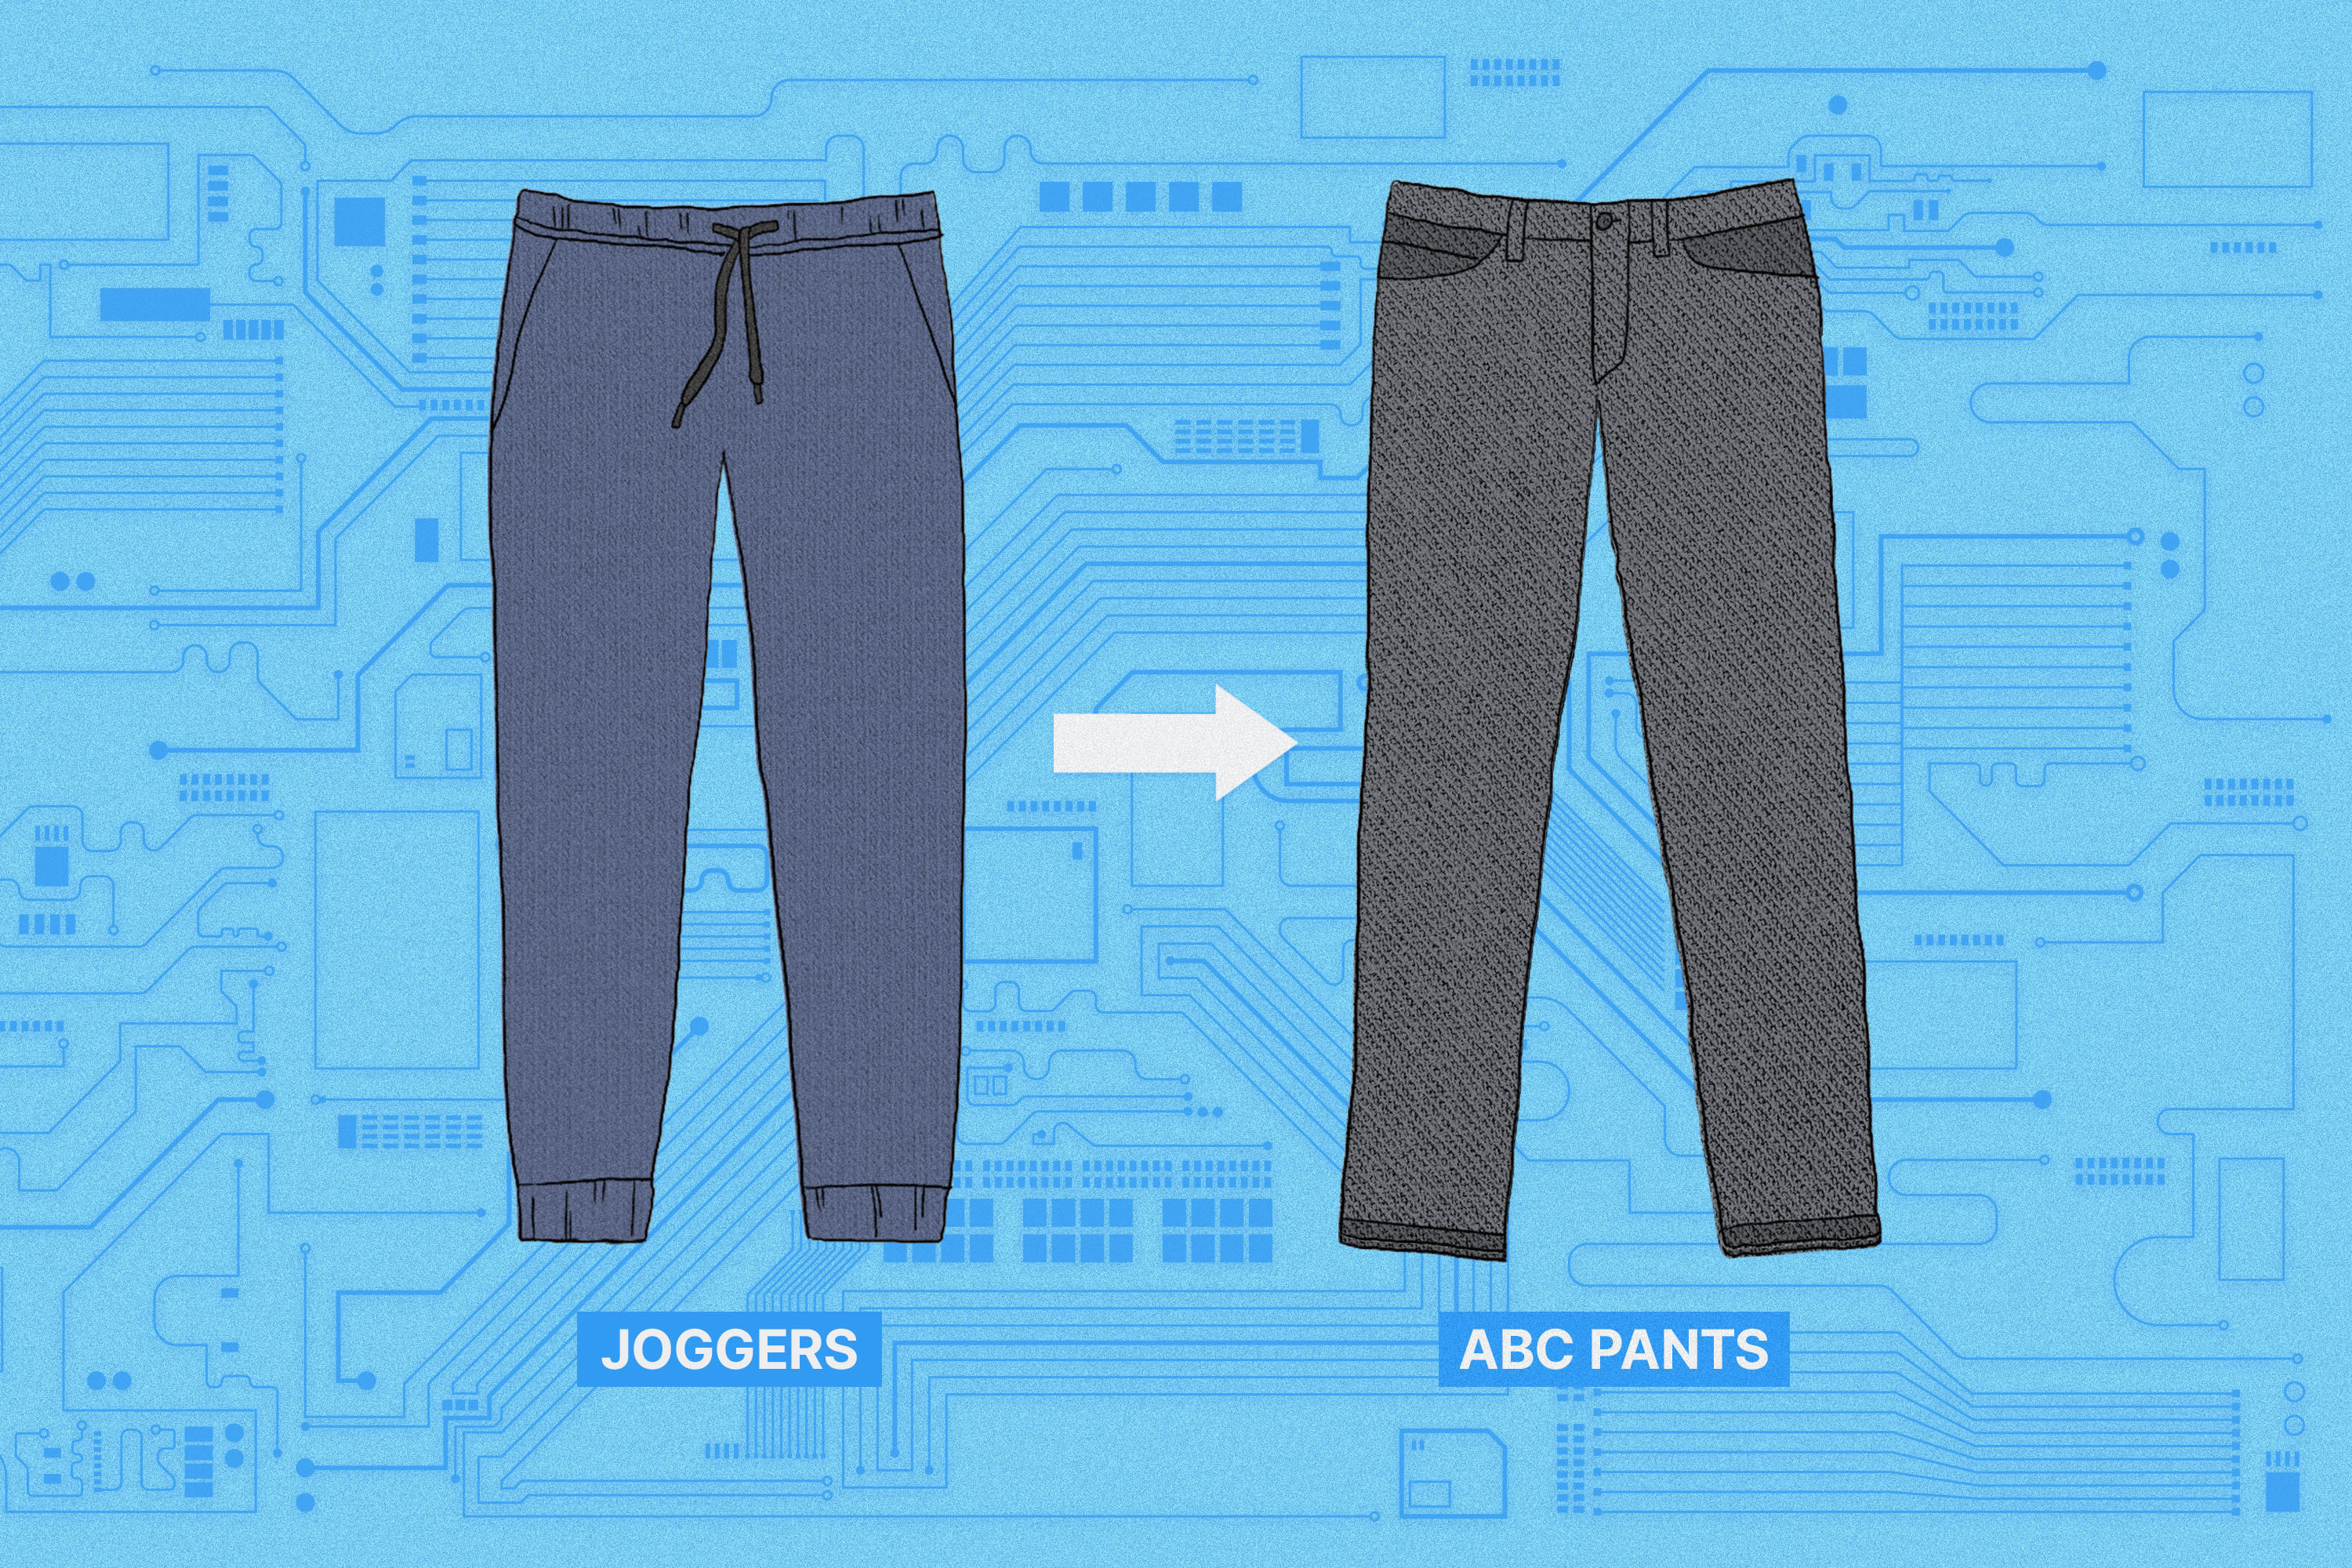 A comparison of a jogger pants and ABC pants.